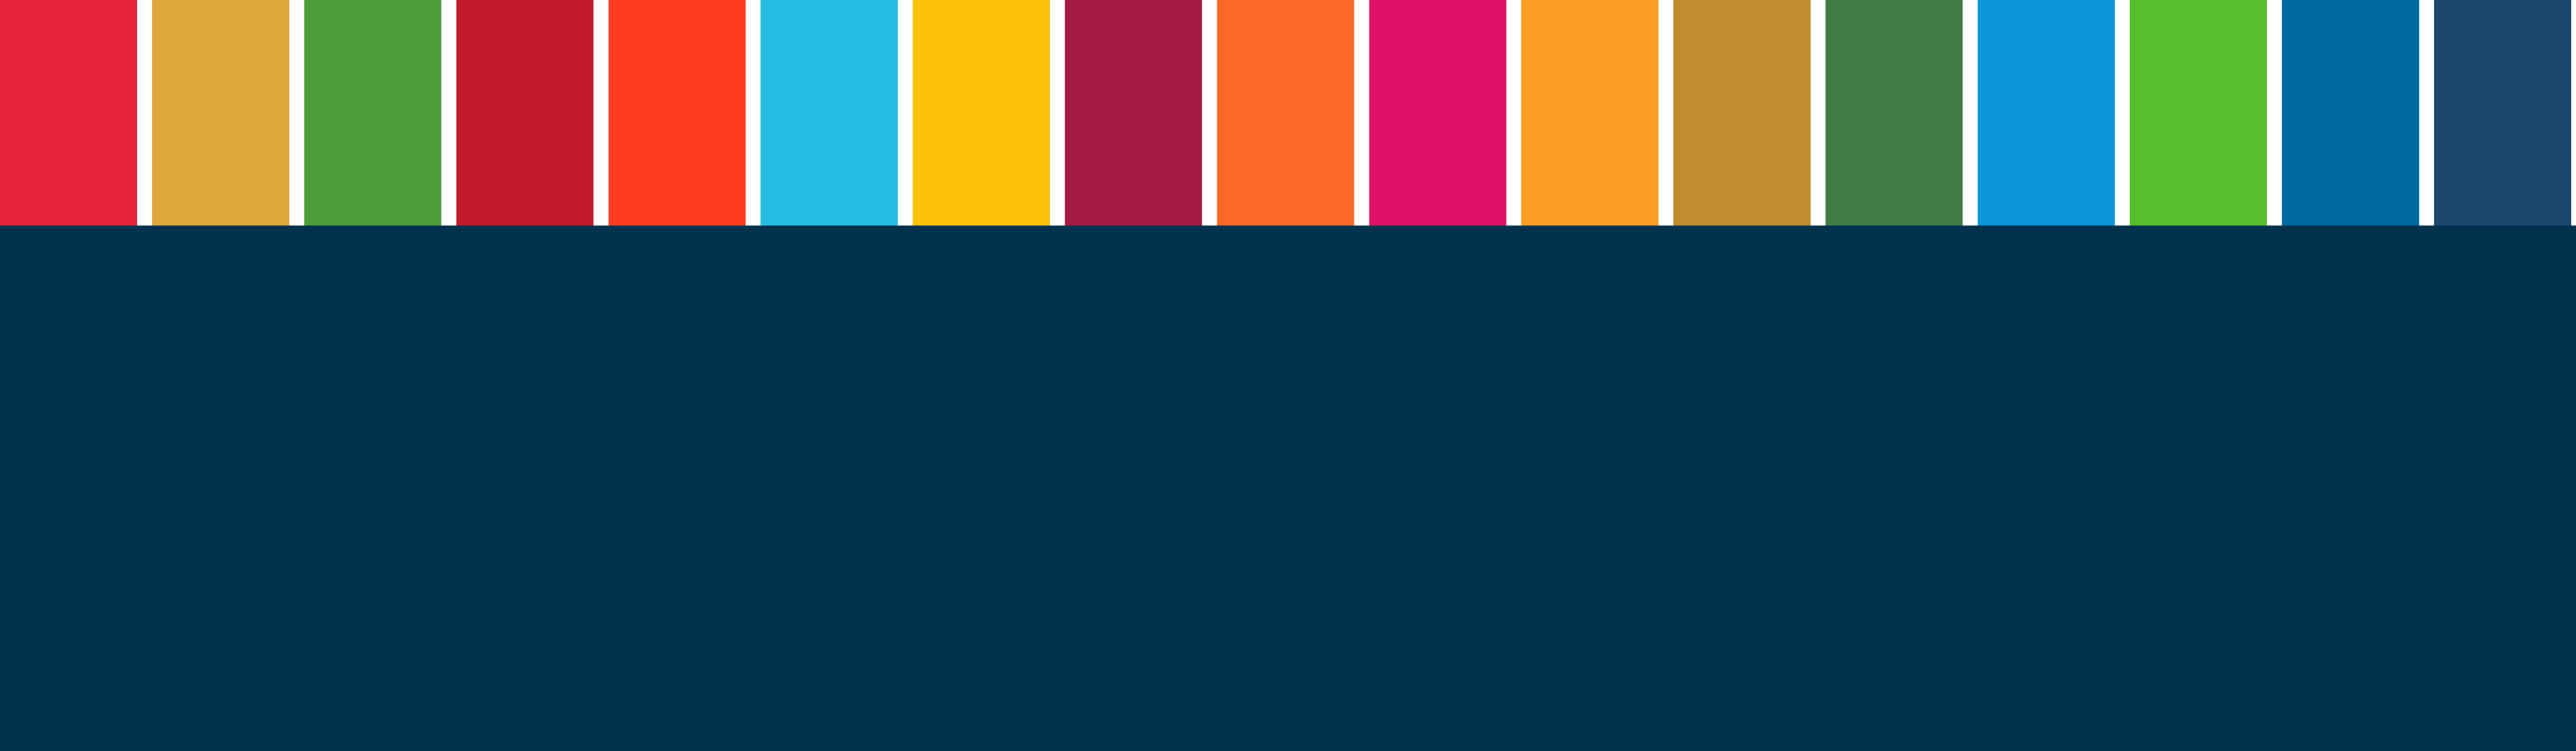 colour blocks aligned to the 17 UN Sustainable Development Goals